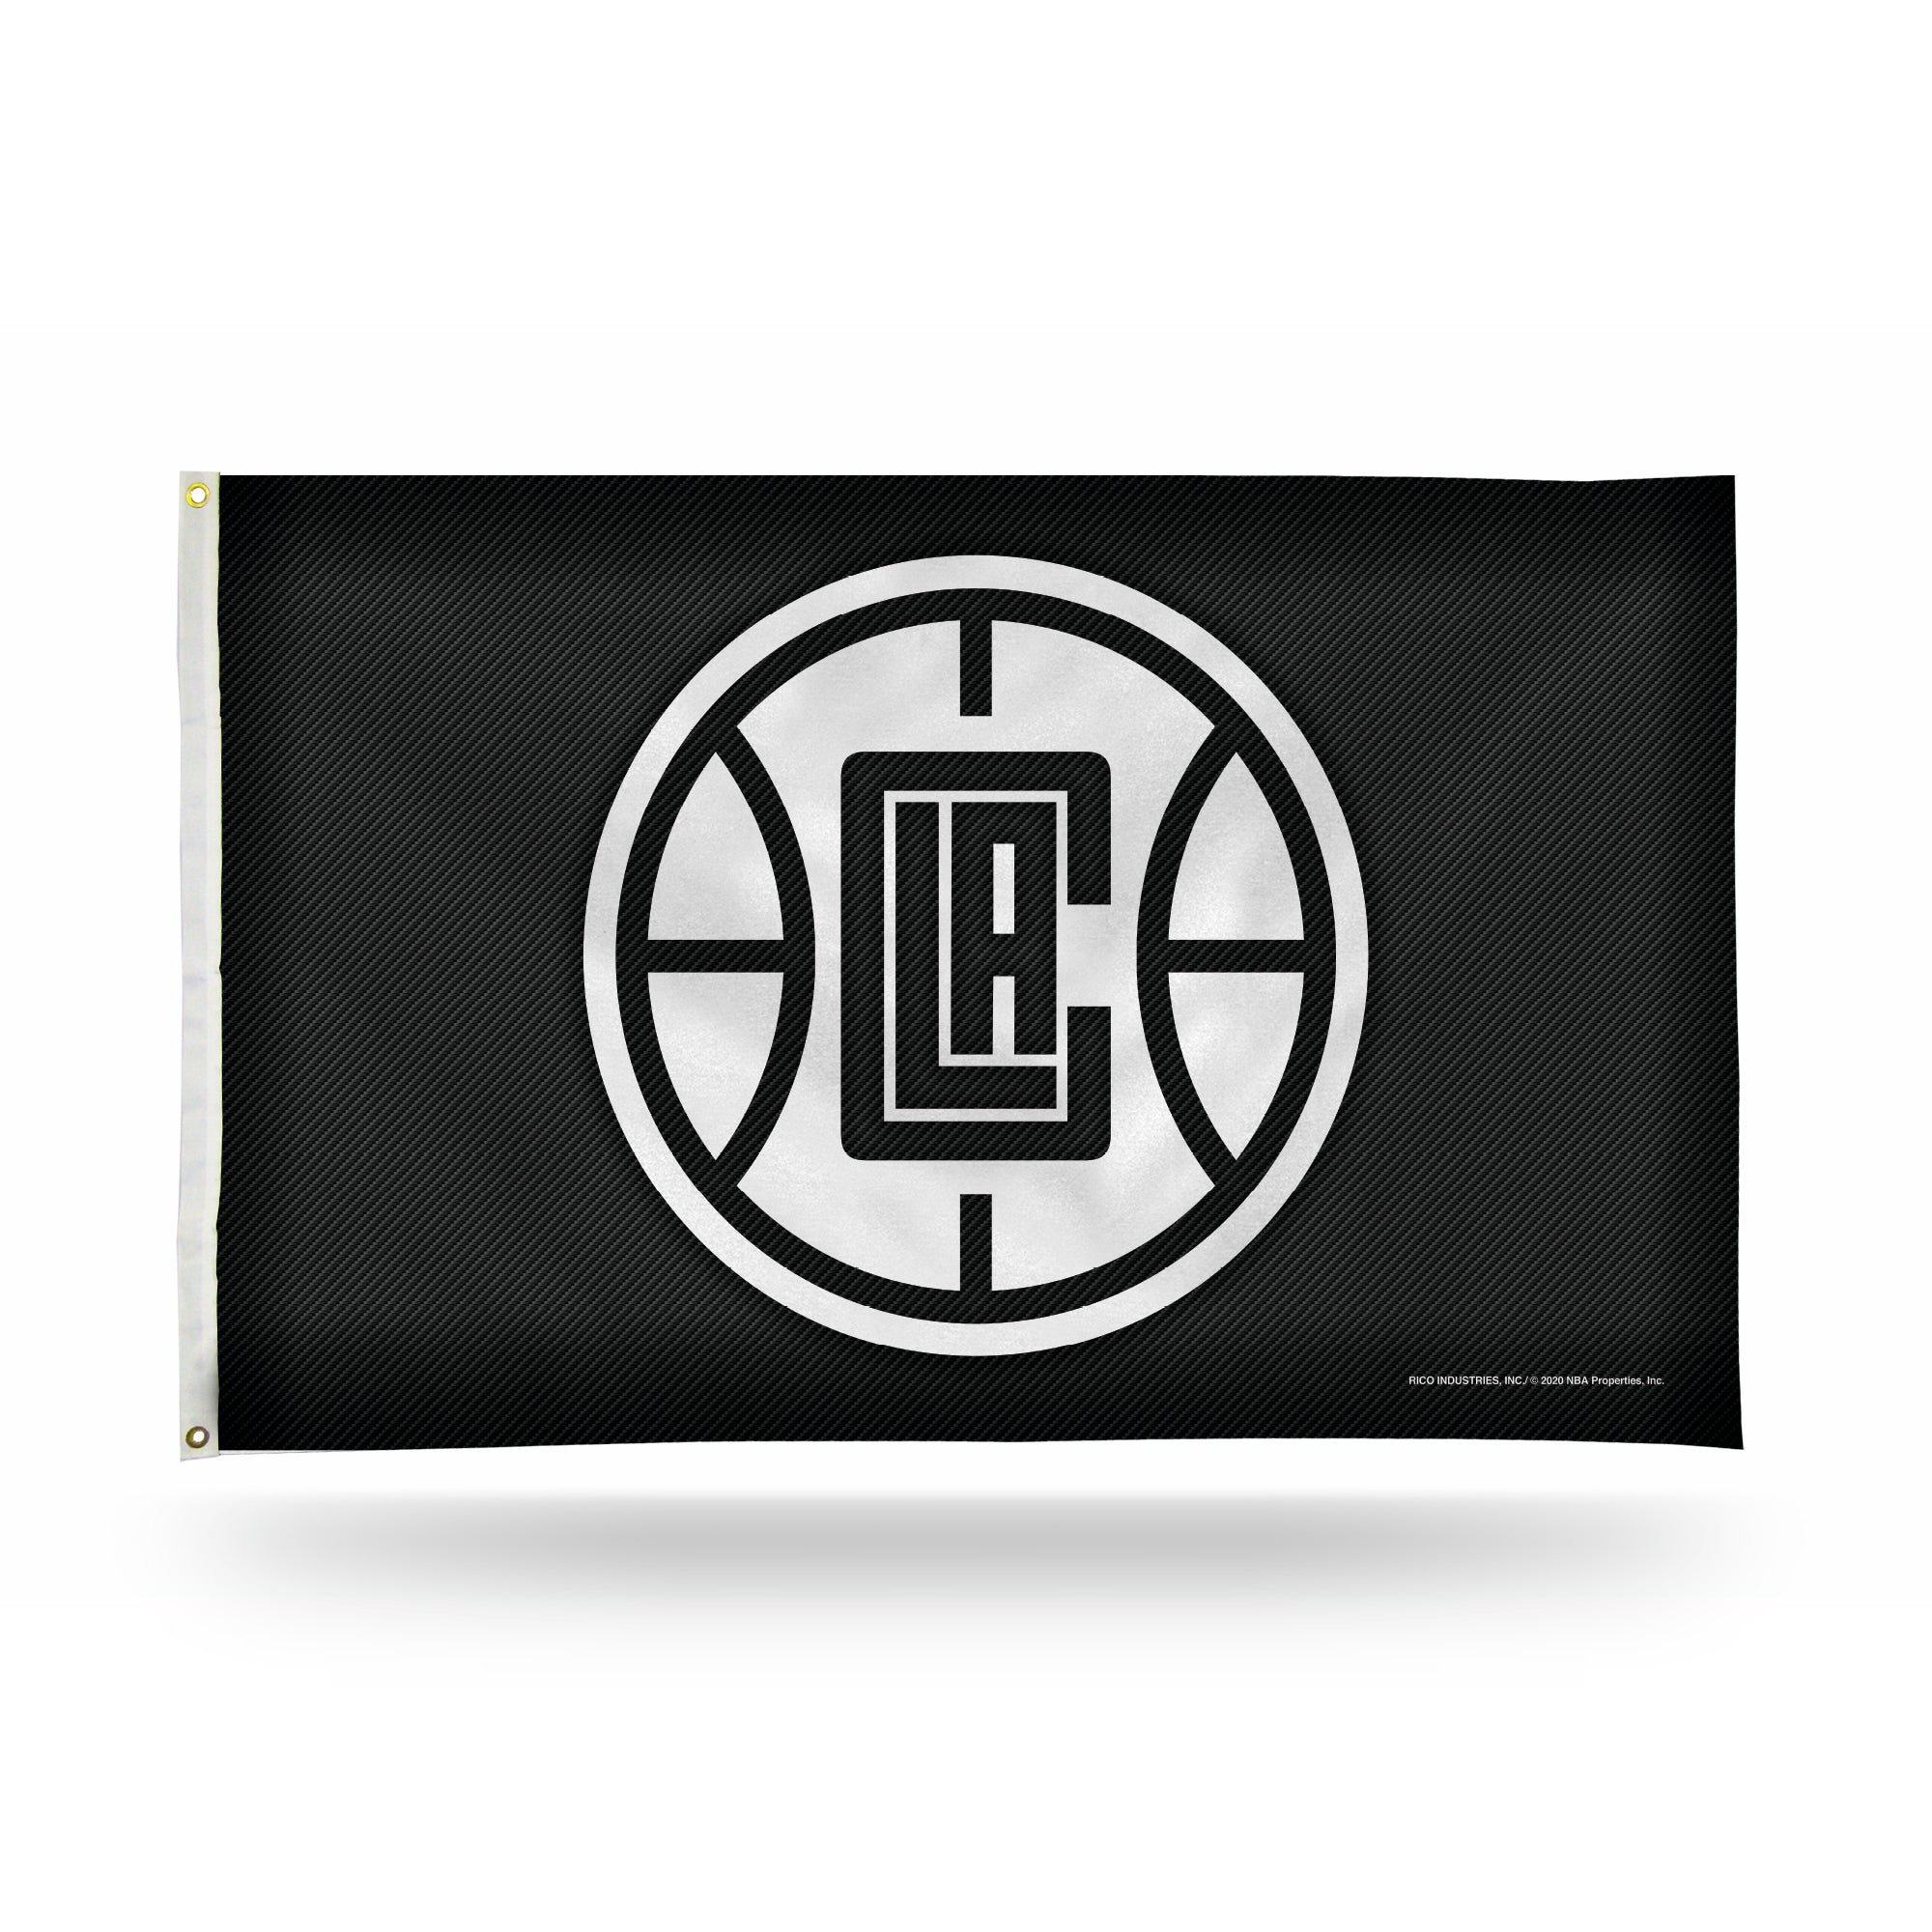 Los Angeles Clippers 3x5 Premium Banner Flag - Carbon Fiber Design